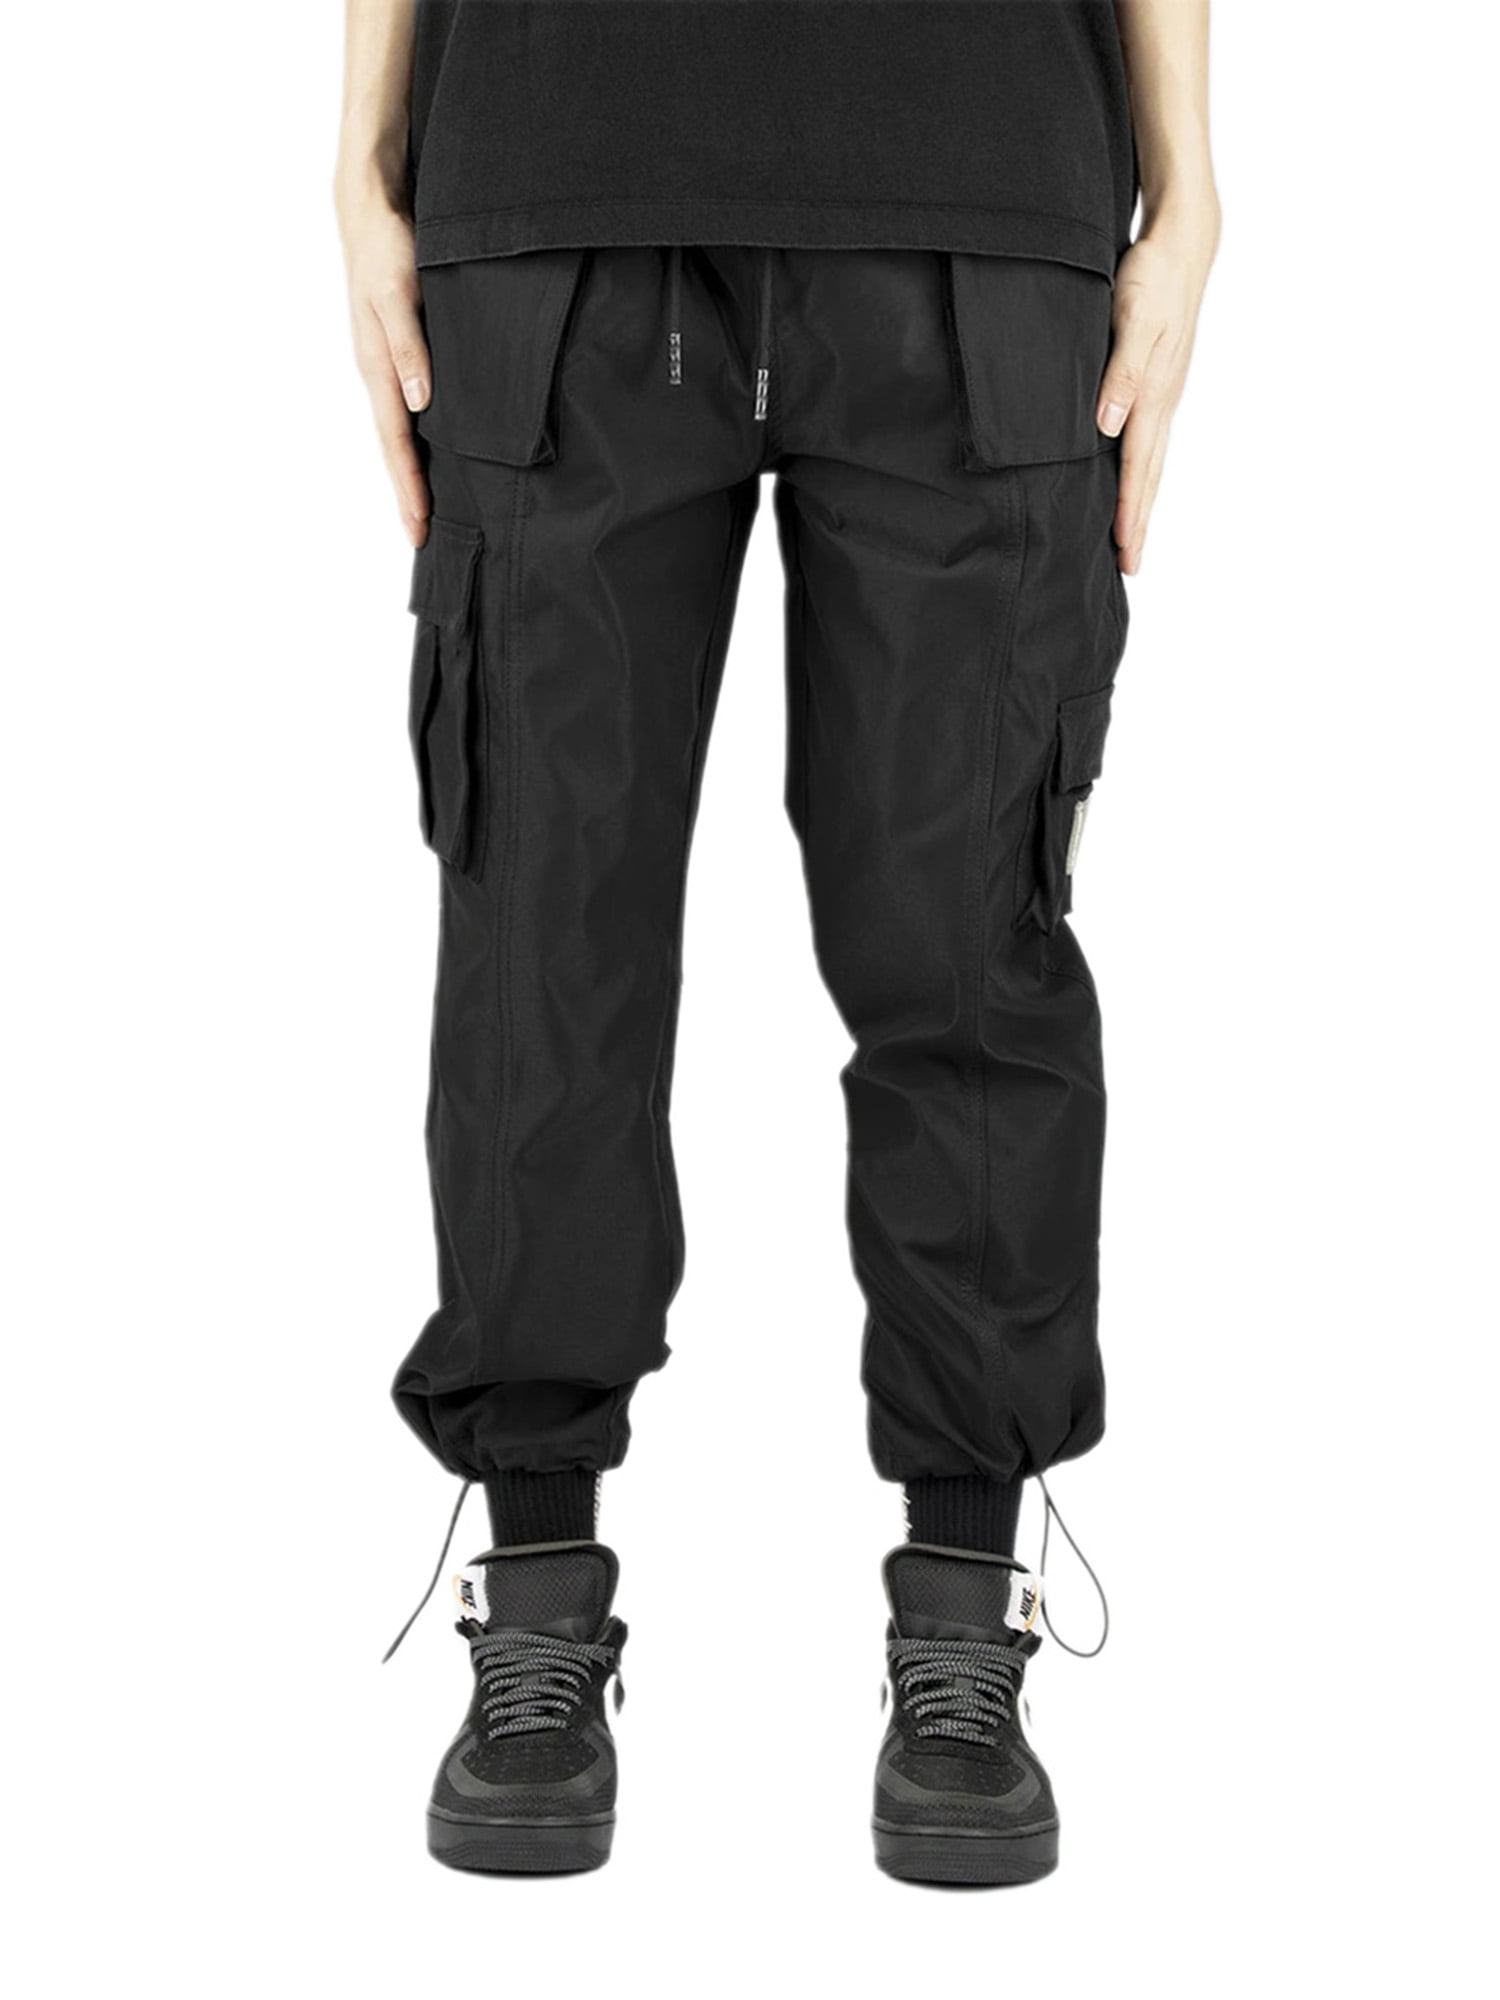 COUTEXYI Men's Solid Color Cargo Harem Pants, Wide-leg Adjustable